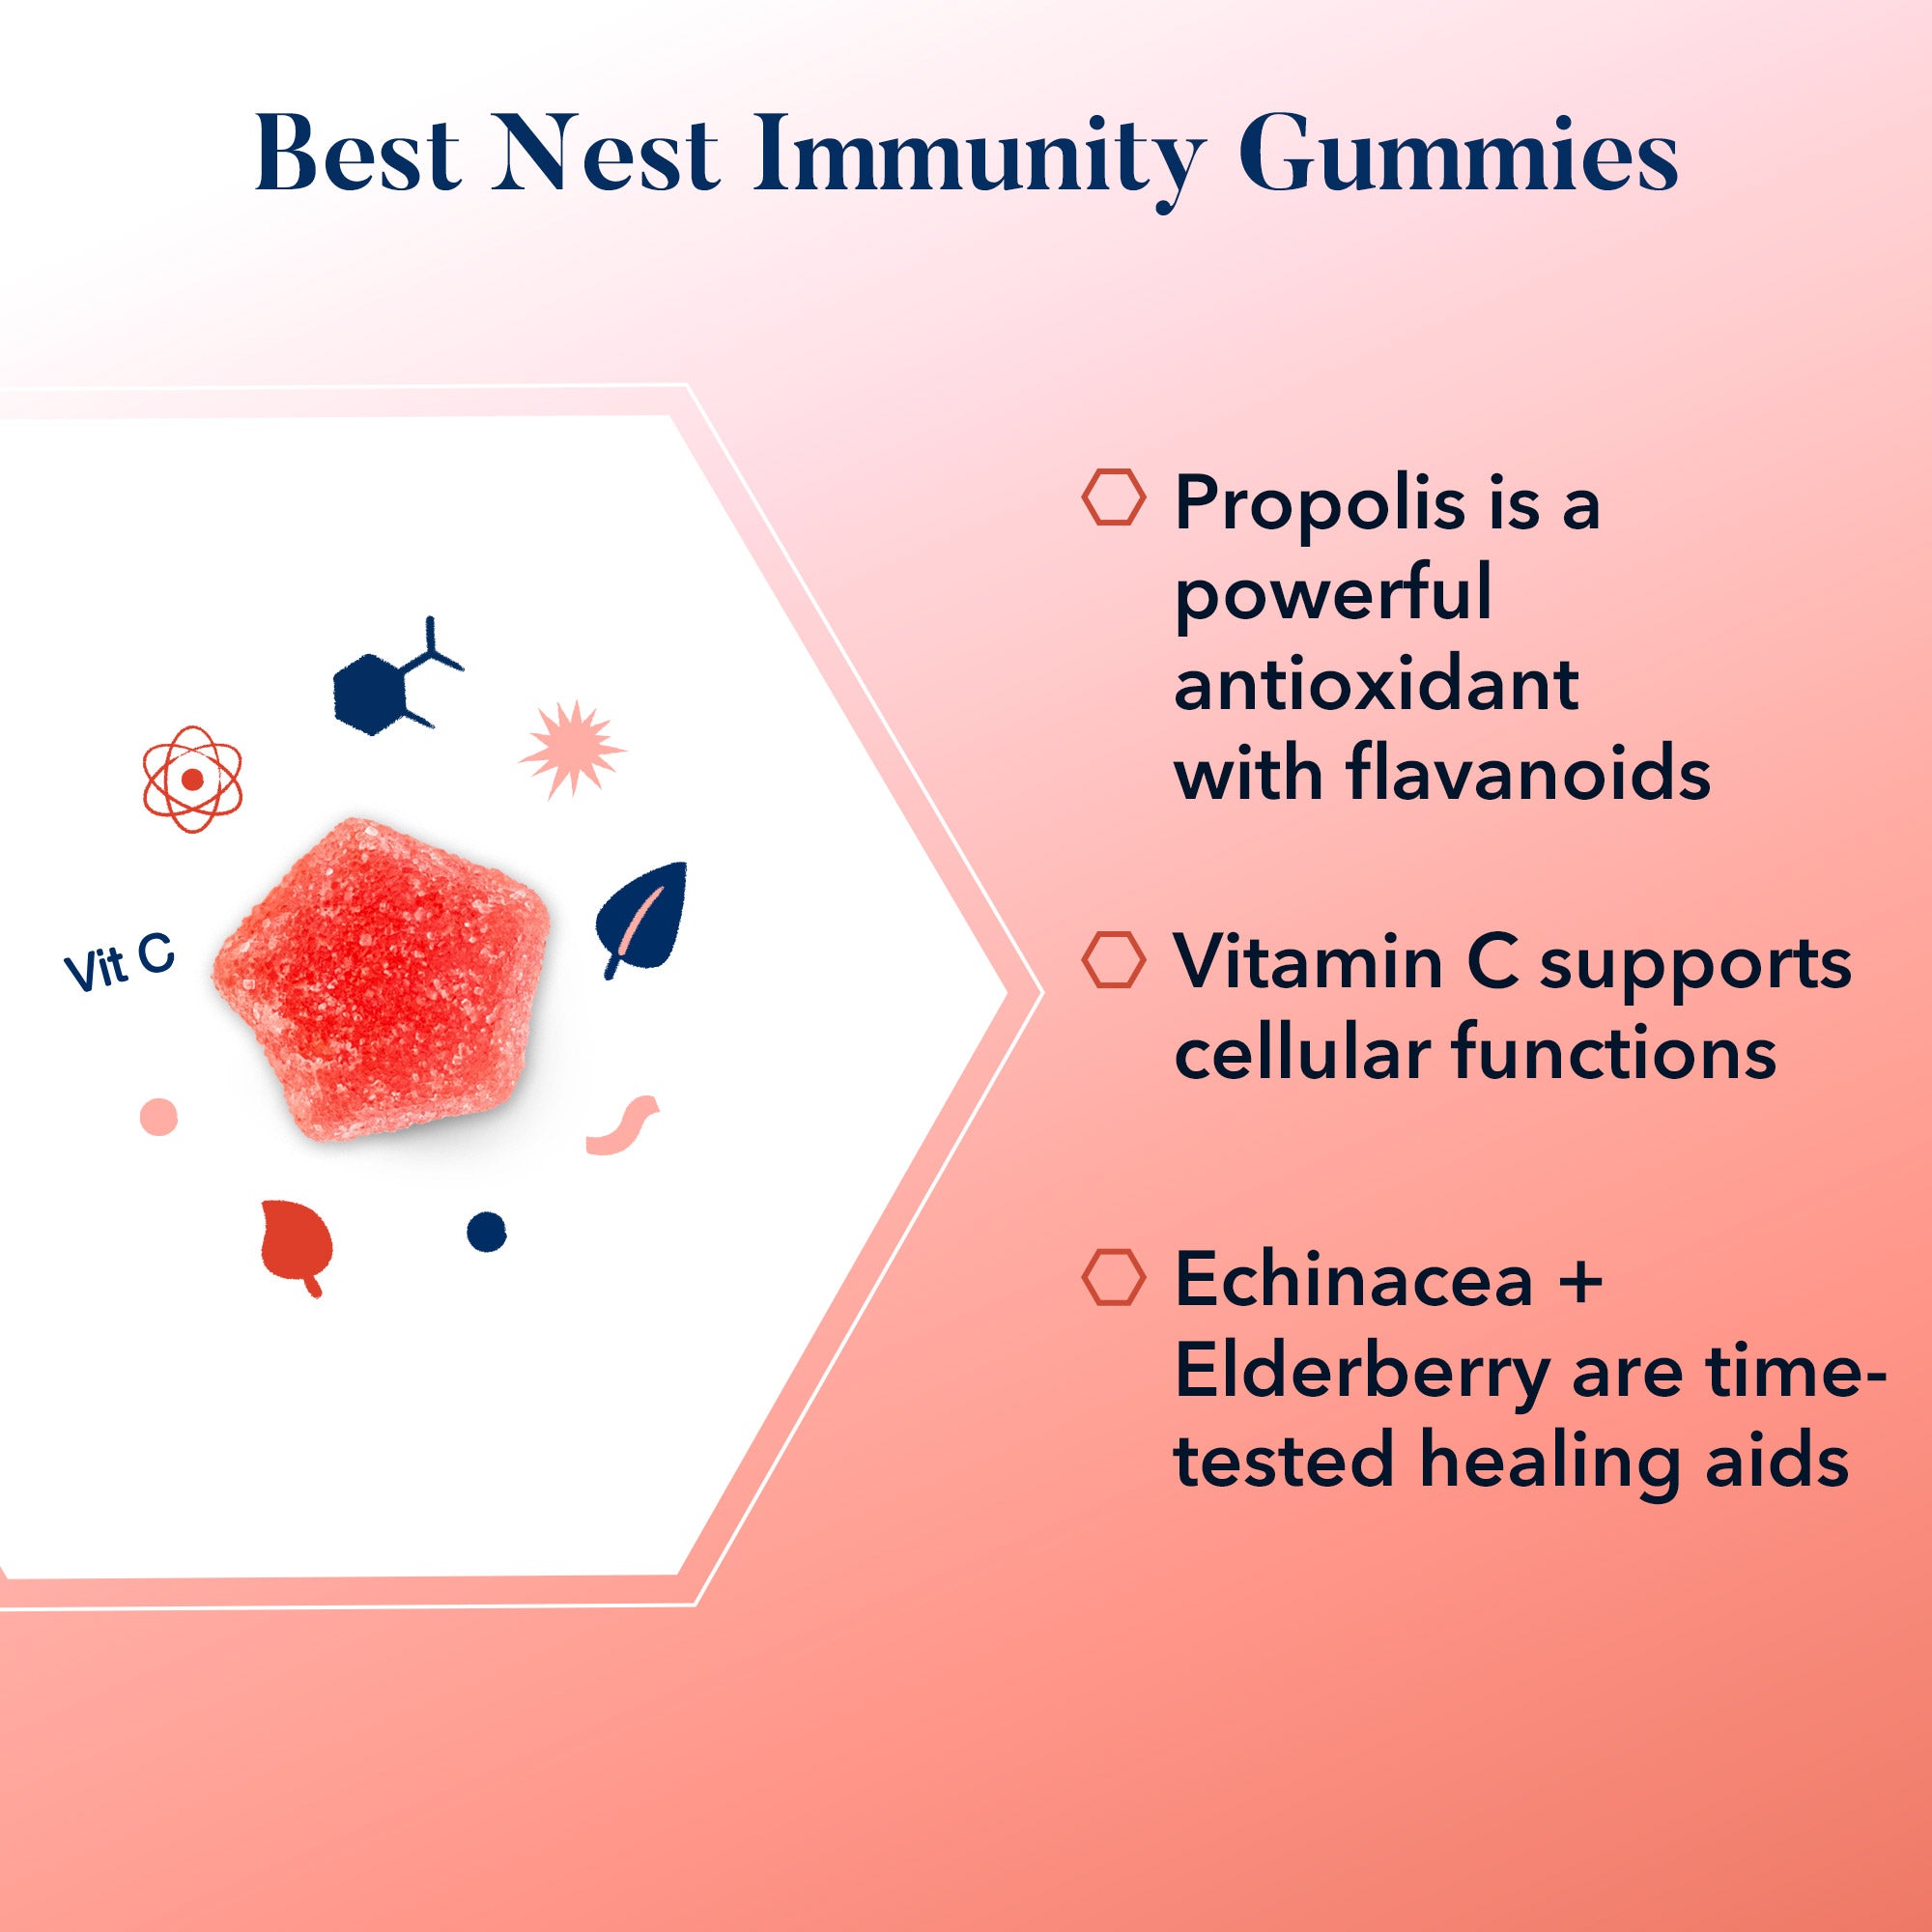 Best Nest Immunity Gummies